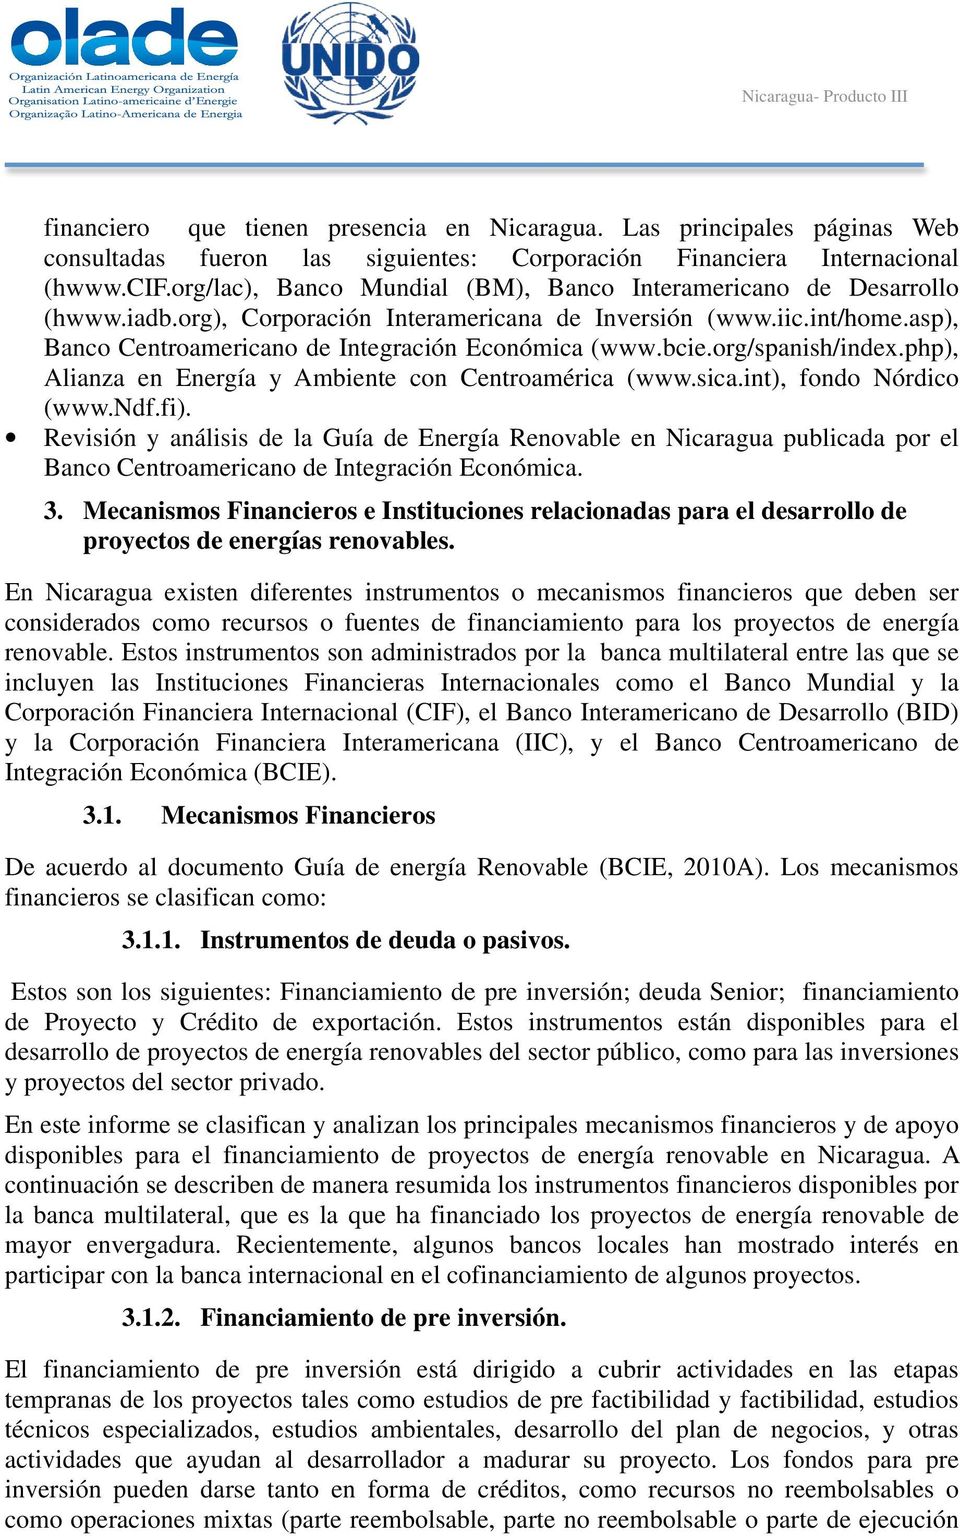 bcie.org/spanish/index.php), Alianza en Energía y Ambiente con Centroamérica (www.sica.int), fondo Nórdico (www.ndf.fi).